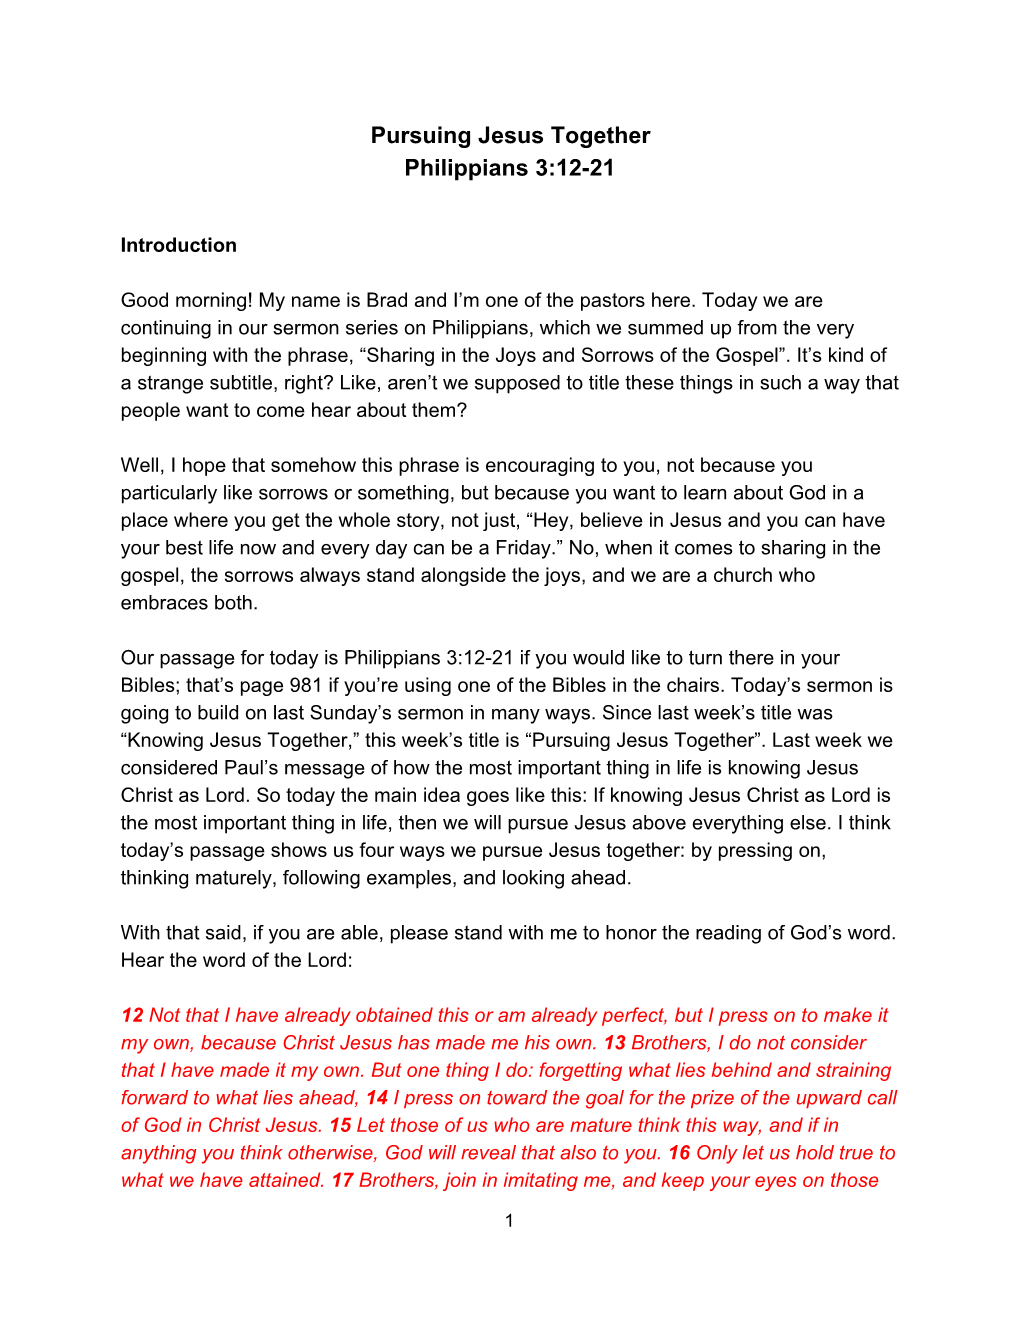 Pursuing Jesus Together Philippians 3:12-21